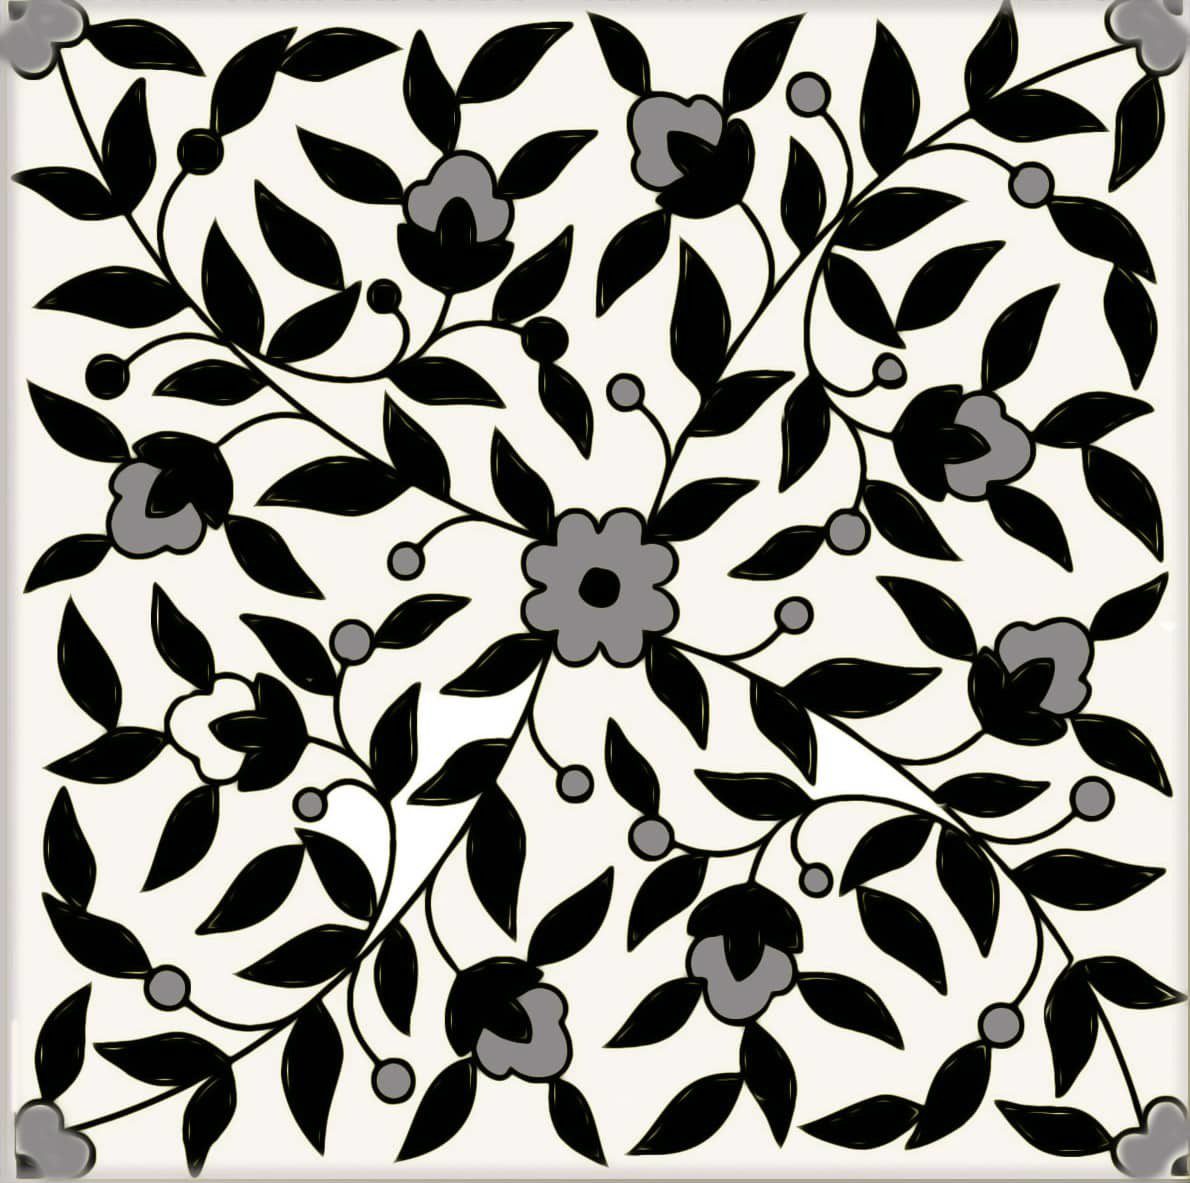 Flora series black and white tile